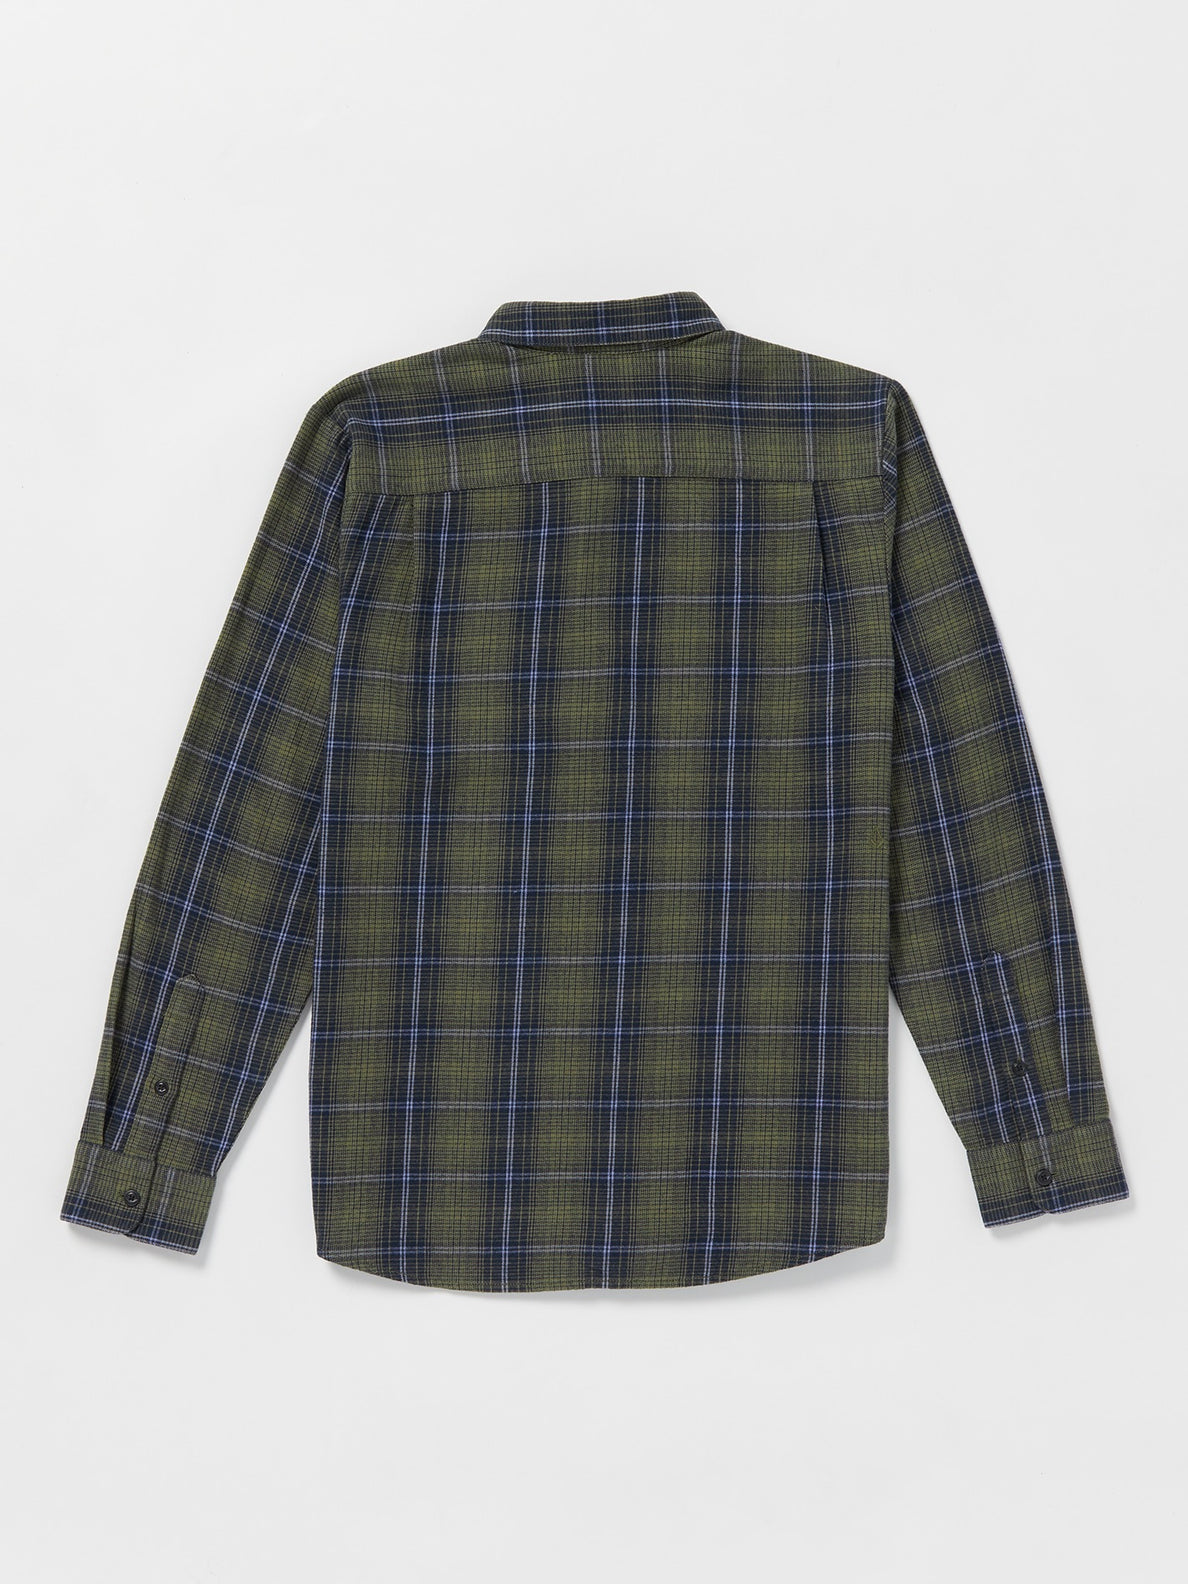 Heavy Twills Flannel Long Sleeve Shirt - Old Mill